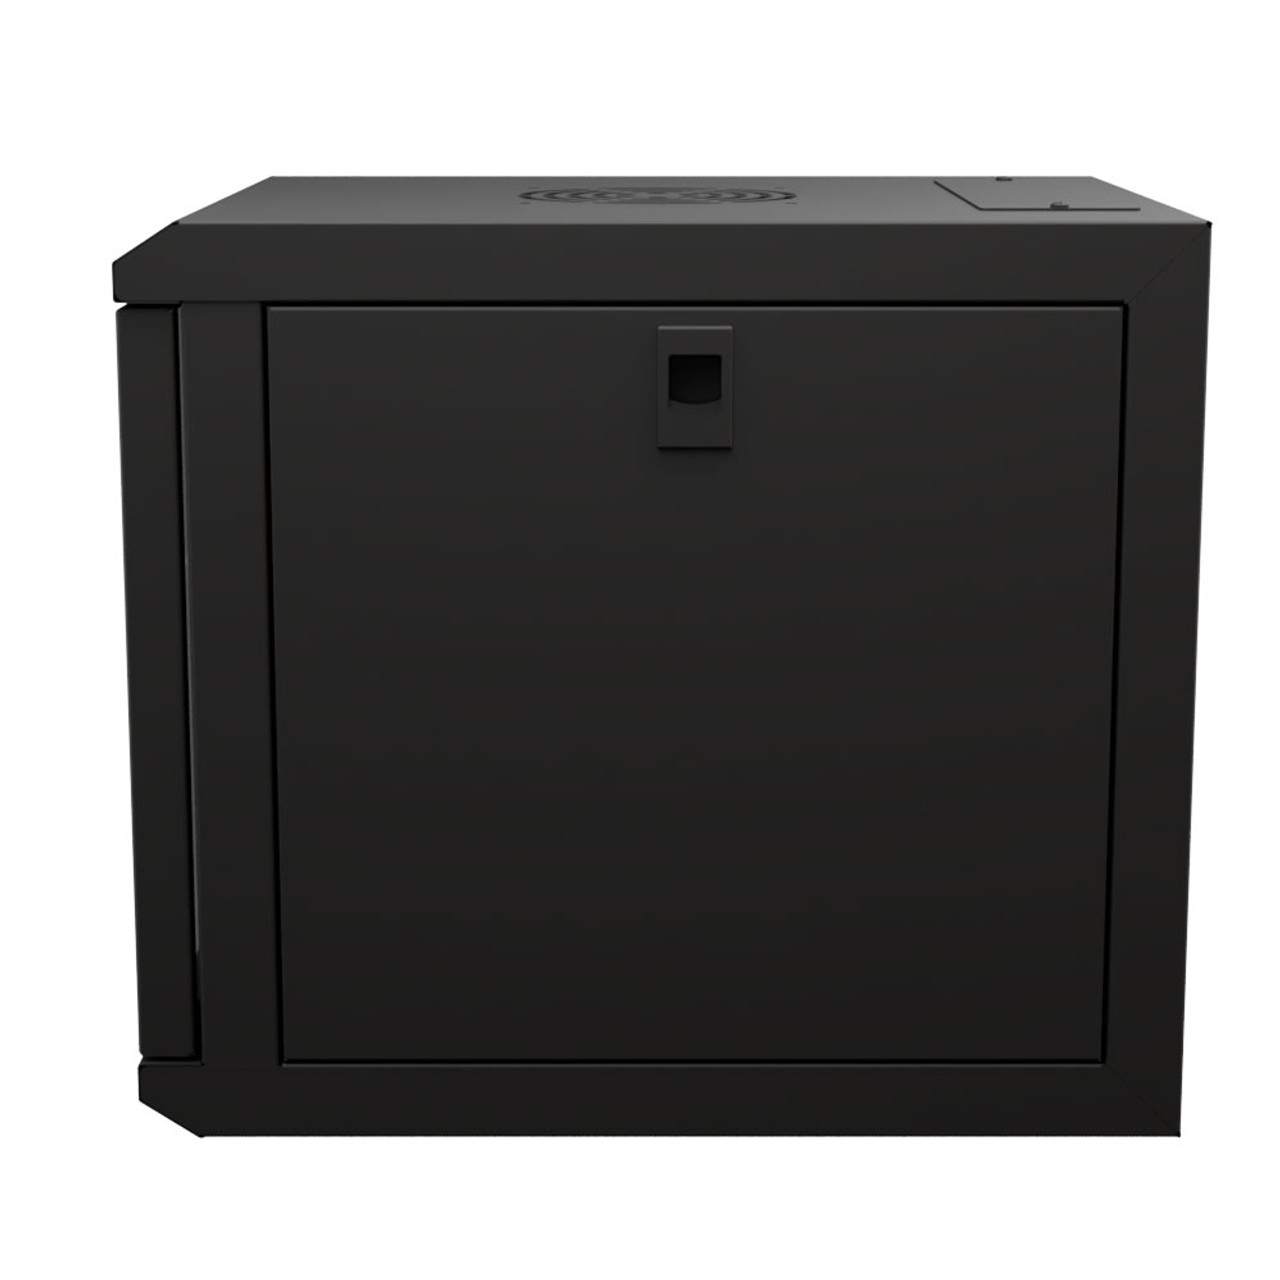 6U  10 Inch Network Server Cabinet, 15.75 inch Deep, Glass Door, Black, Wall Mountable, 2 x Shelves, 1 x Blank Panel